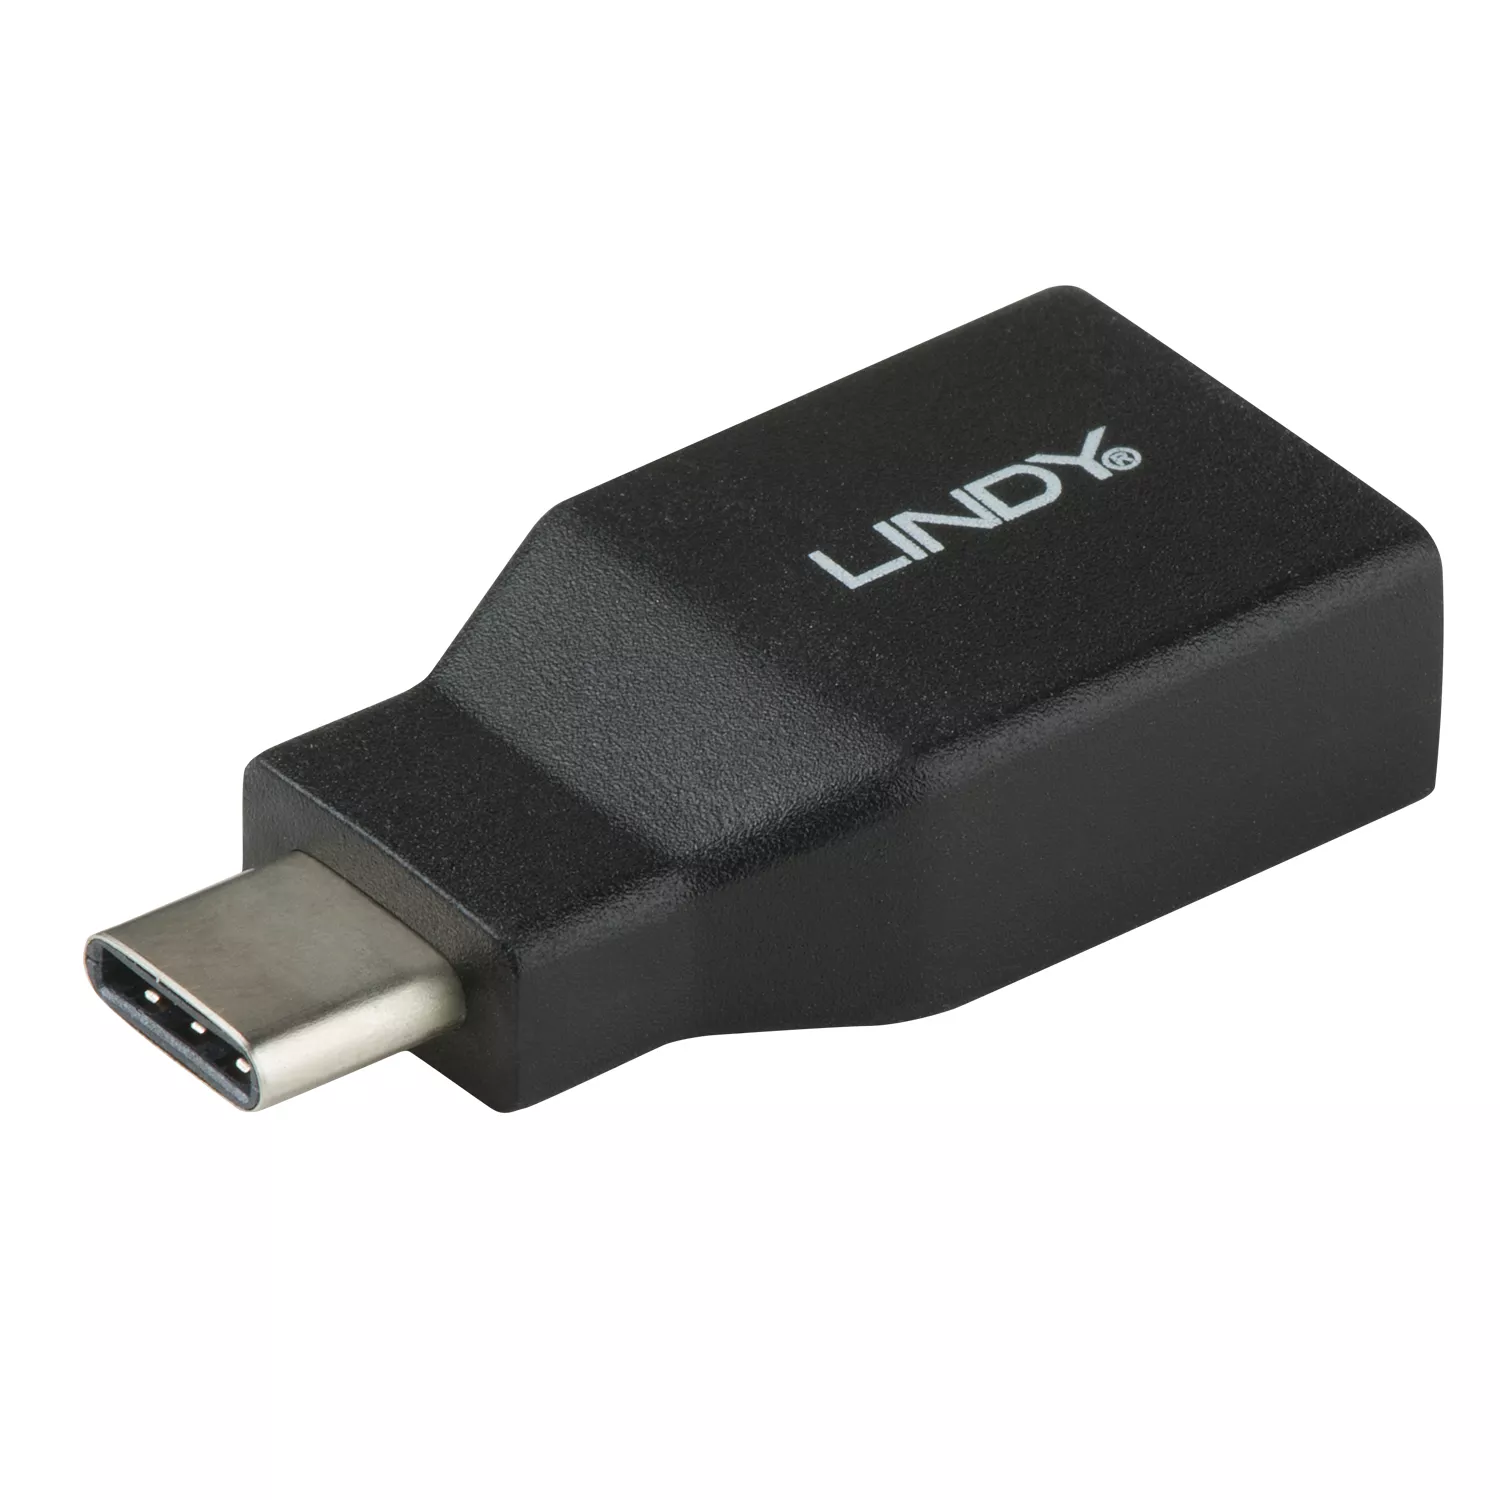 Revendeur officiel Câble USB LINDY USB 3.1 Adapter Type C/A USB 3.1 Type C plug/ Type